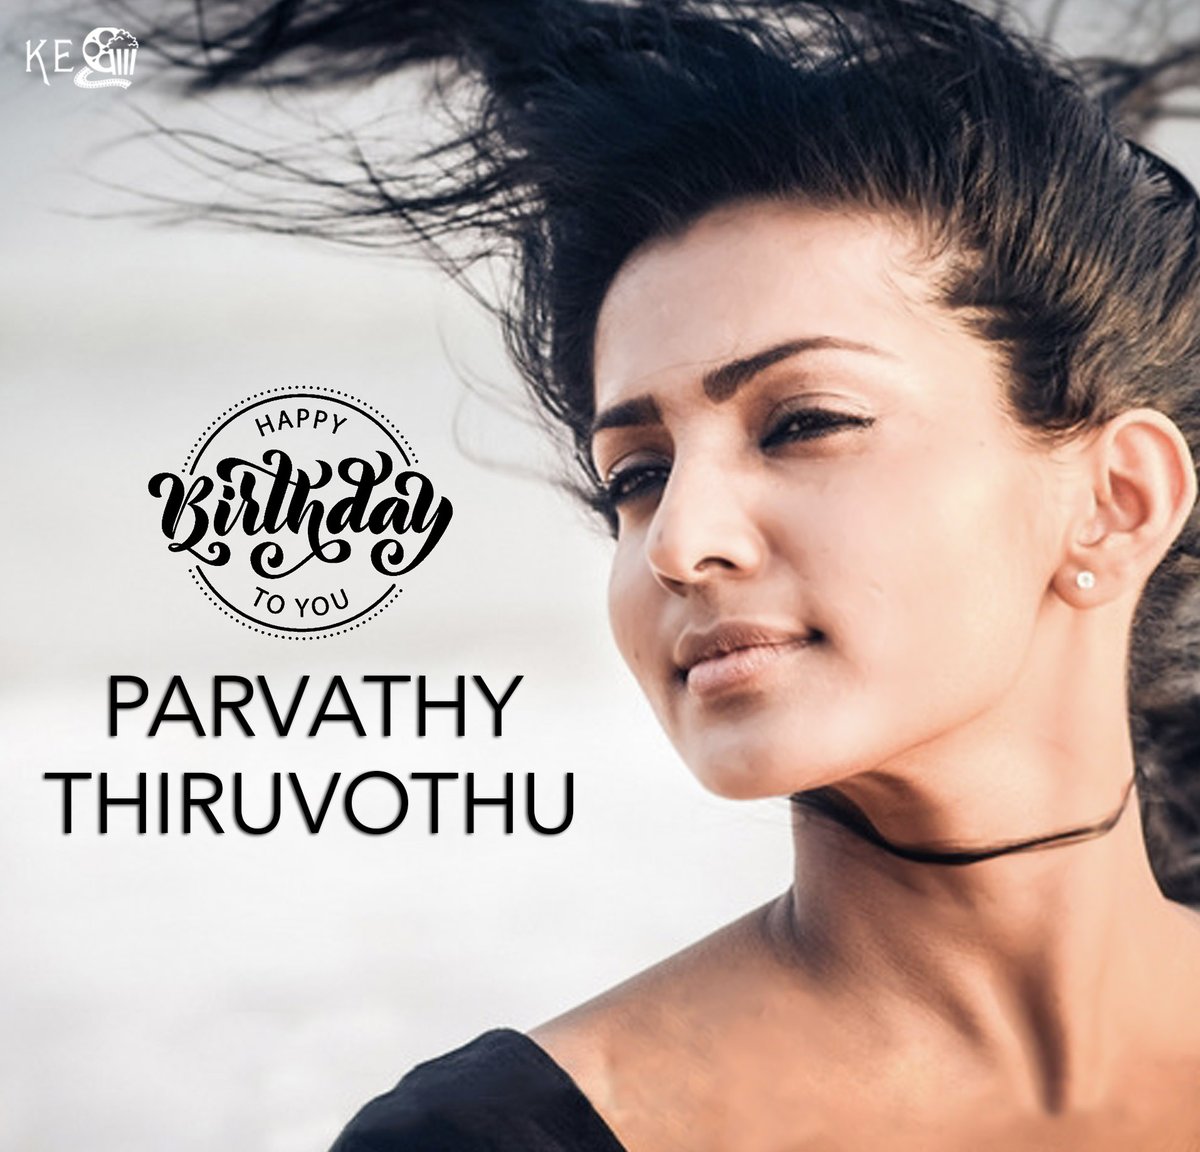 Wishing Parvathy Thiruvothu Very HappyBirthday #HappybirthdayParvathythiruvothu #HBDParvathythiruvothu #Parvathythiruvothu #Khafaentertainment